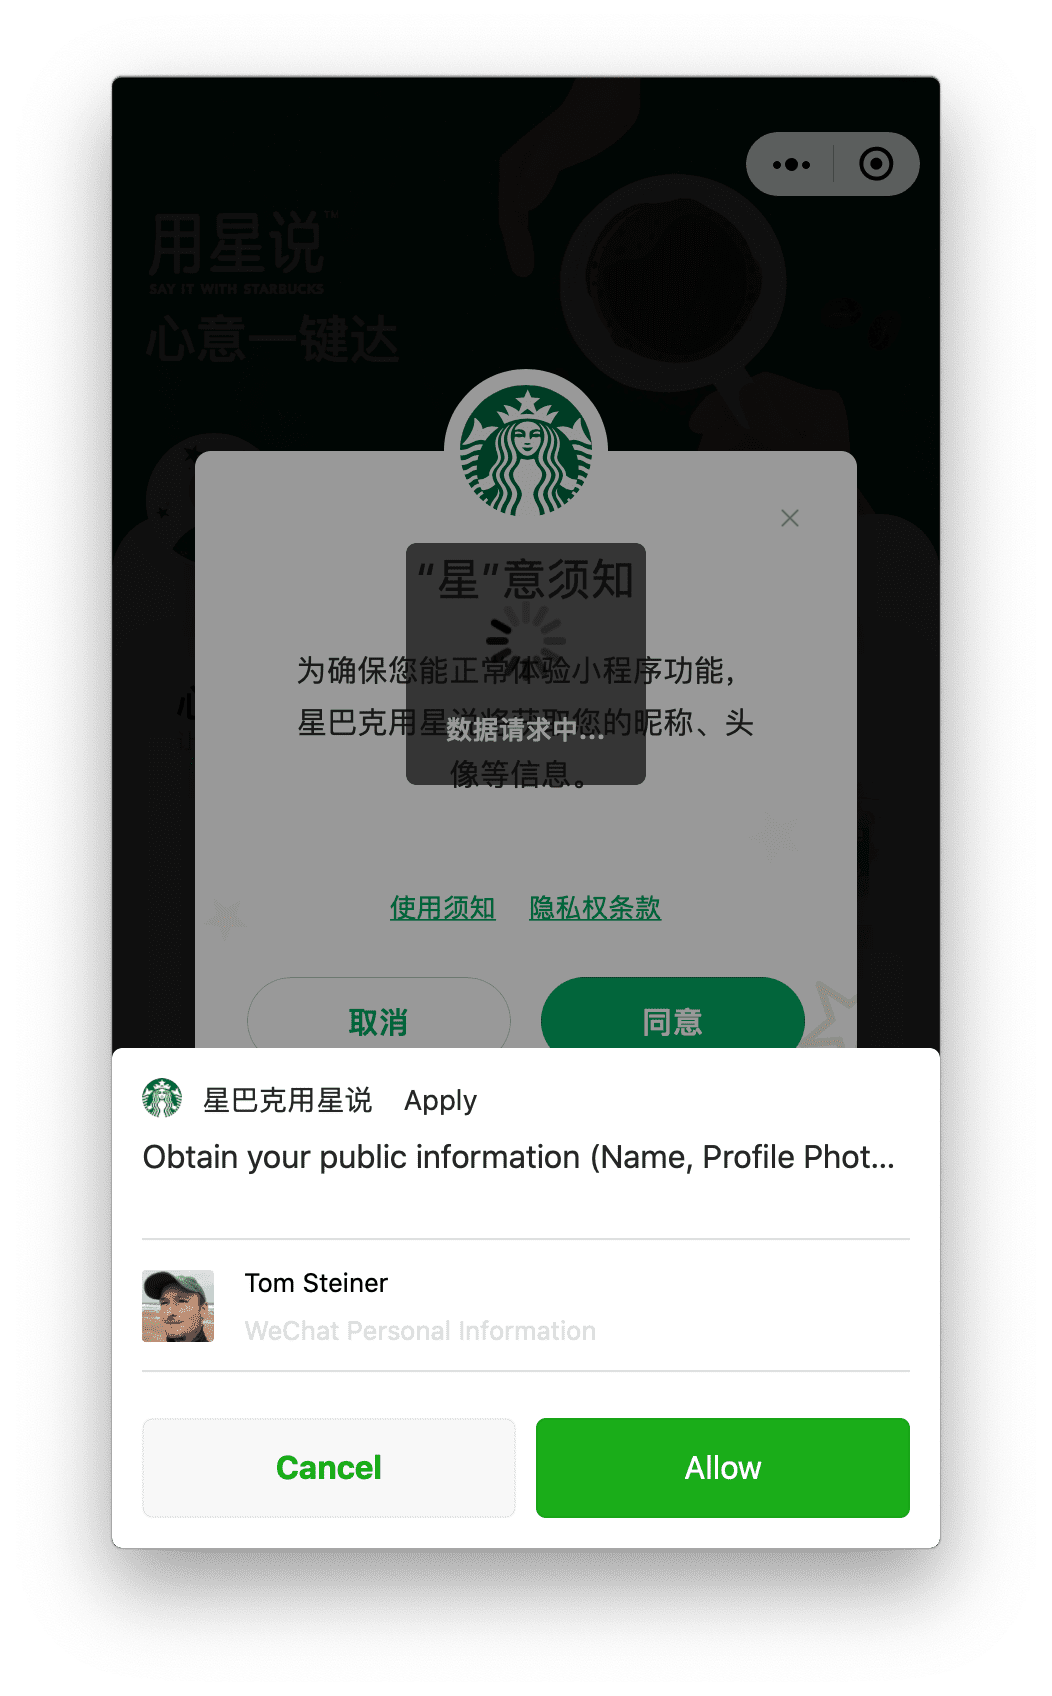 macOS에서 실행되는 Starbucks Mini 앱에서 하단에 표시된 메시지를 통해 사용자가 부여할 수 있는 사용자 프로필 권한을 요청합니다.